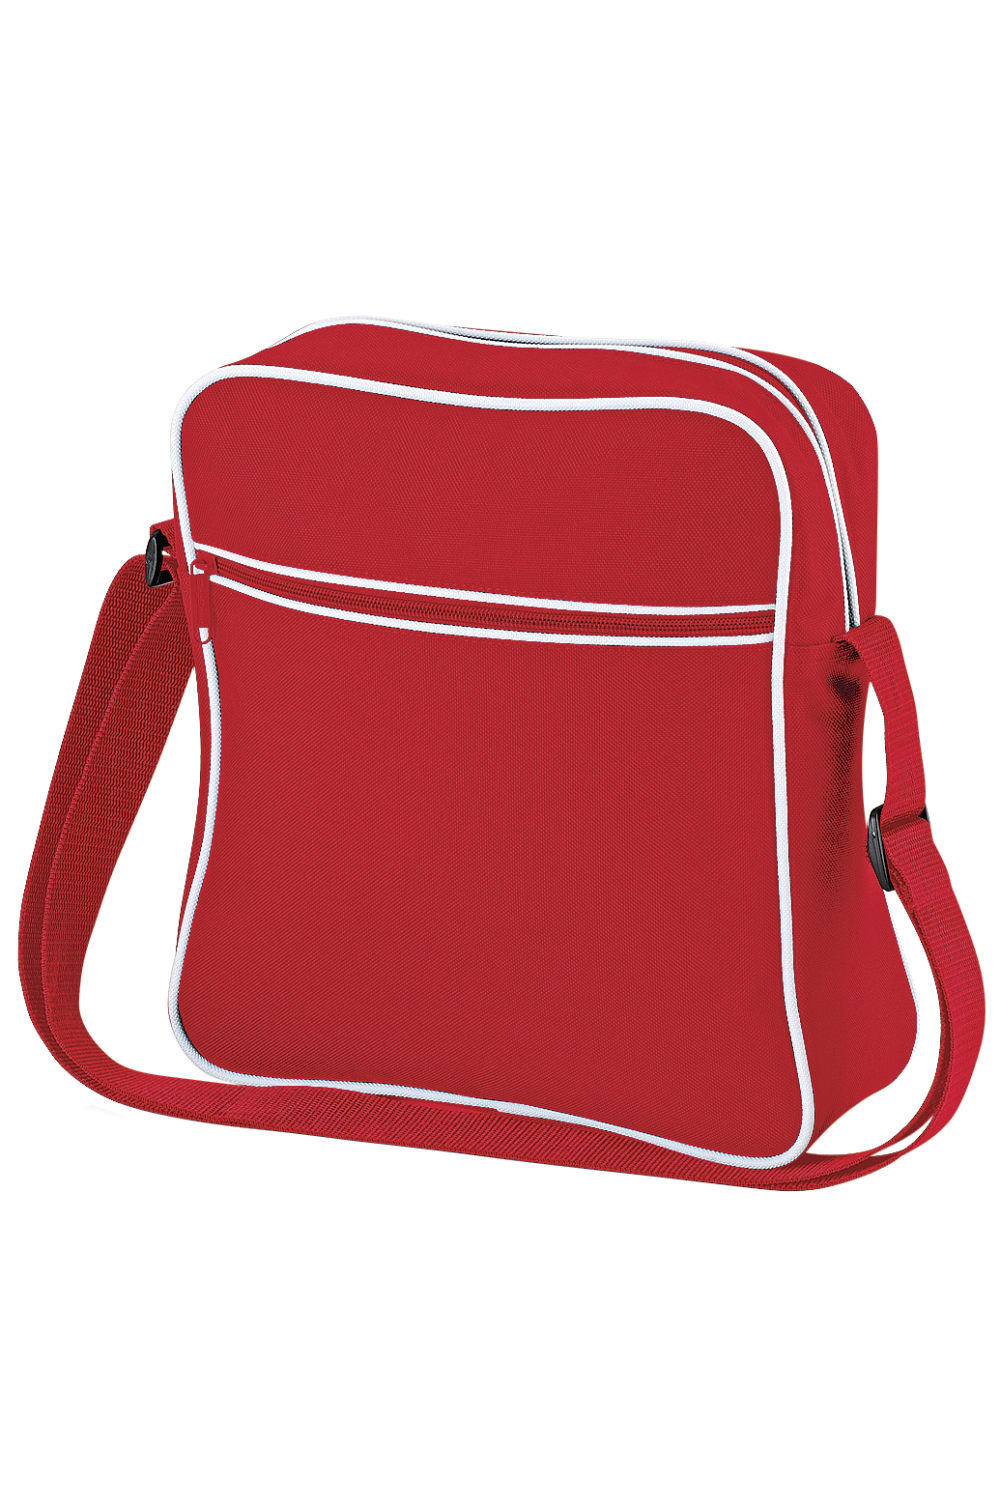 Retro Flight / Travel Bag 1.8 Gallons- Classic Red/White